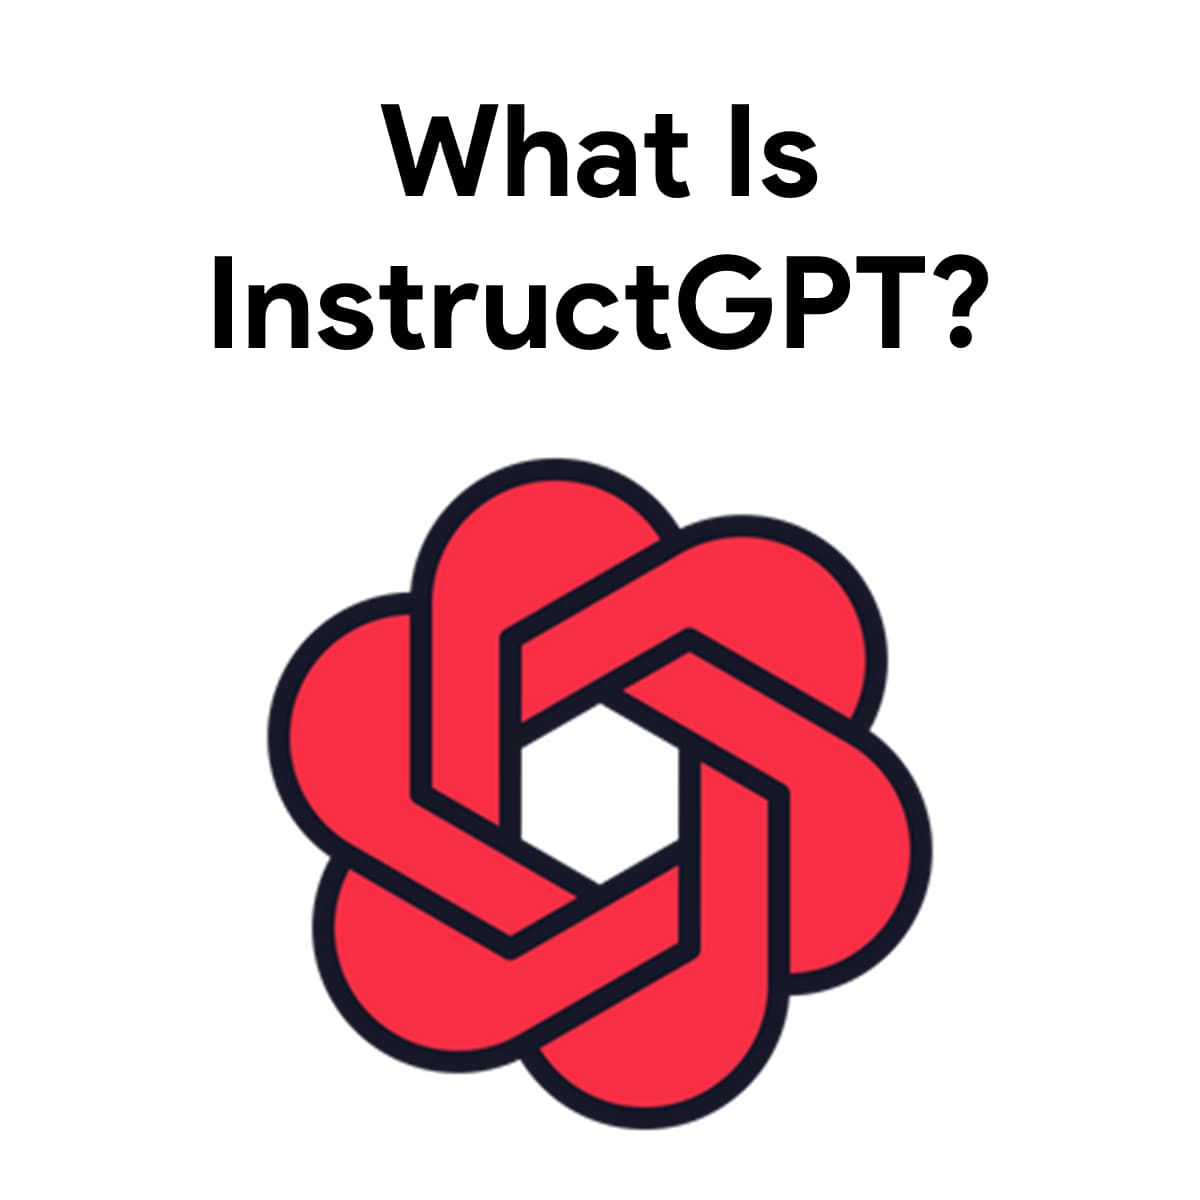 Instruct GPT